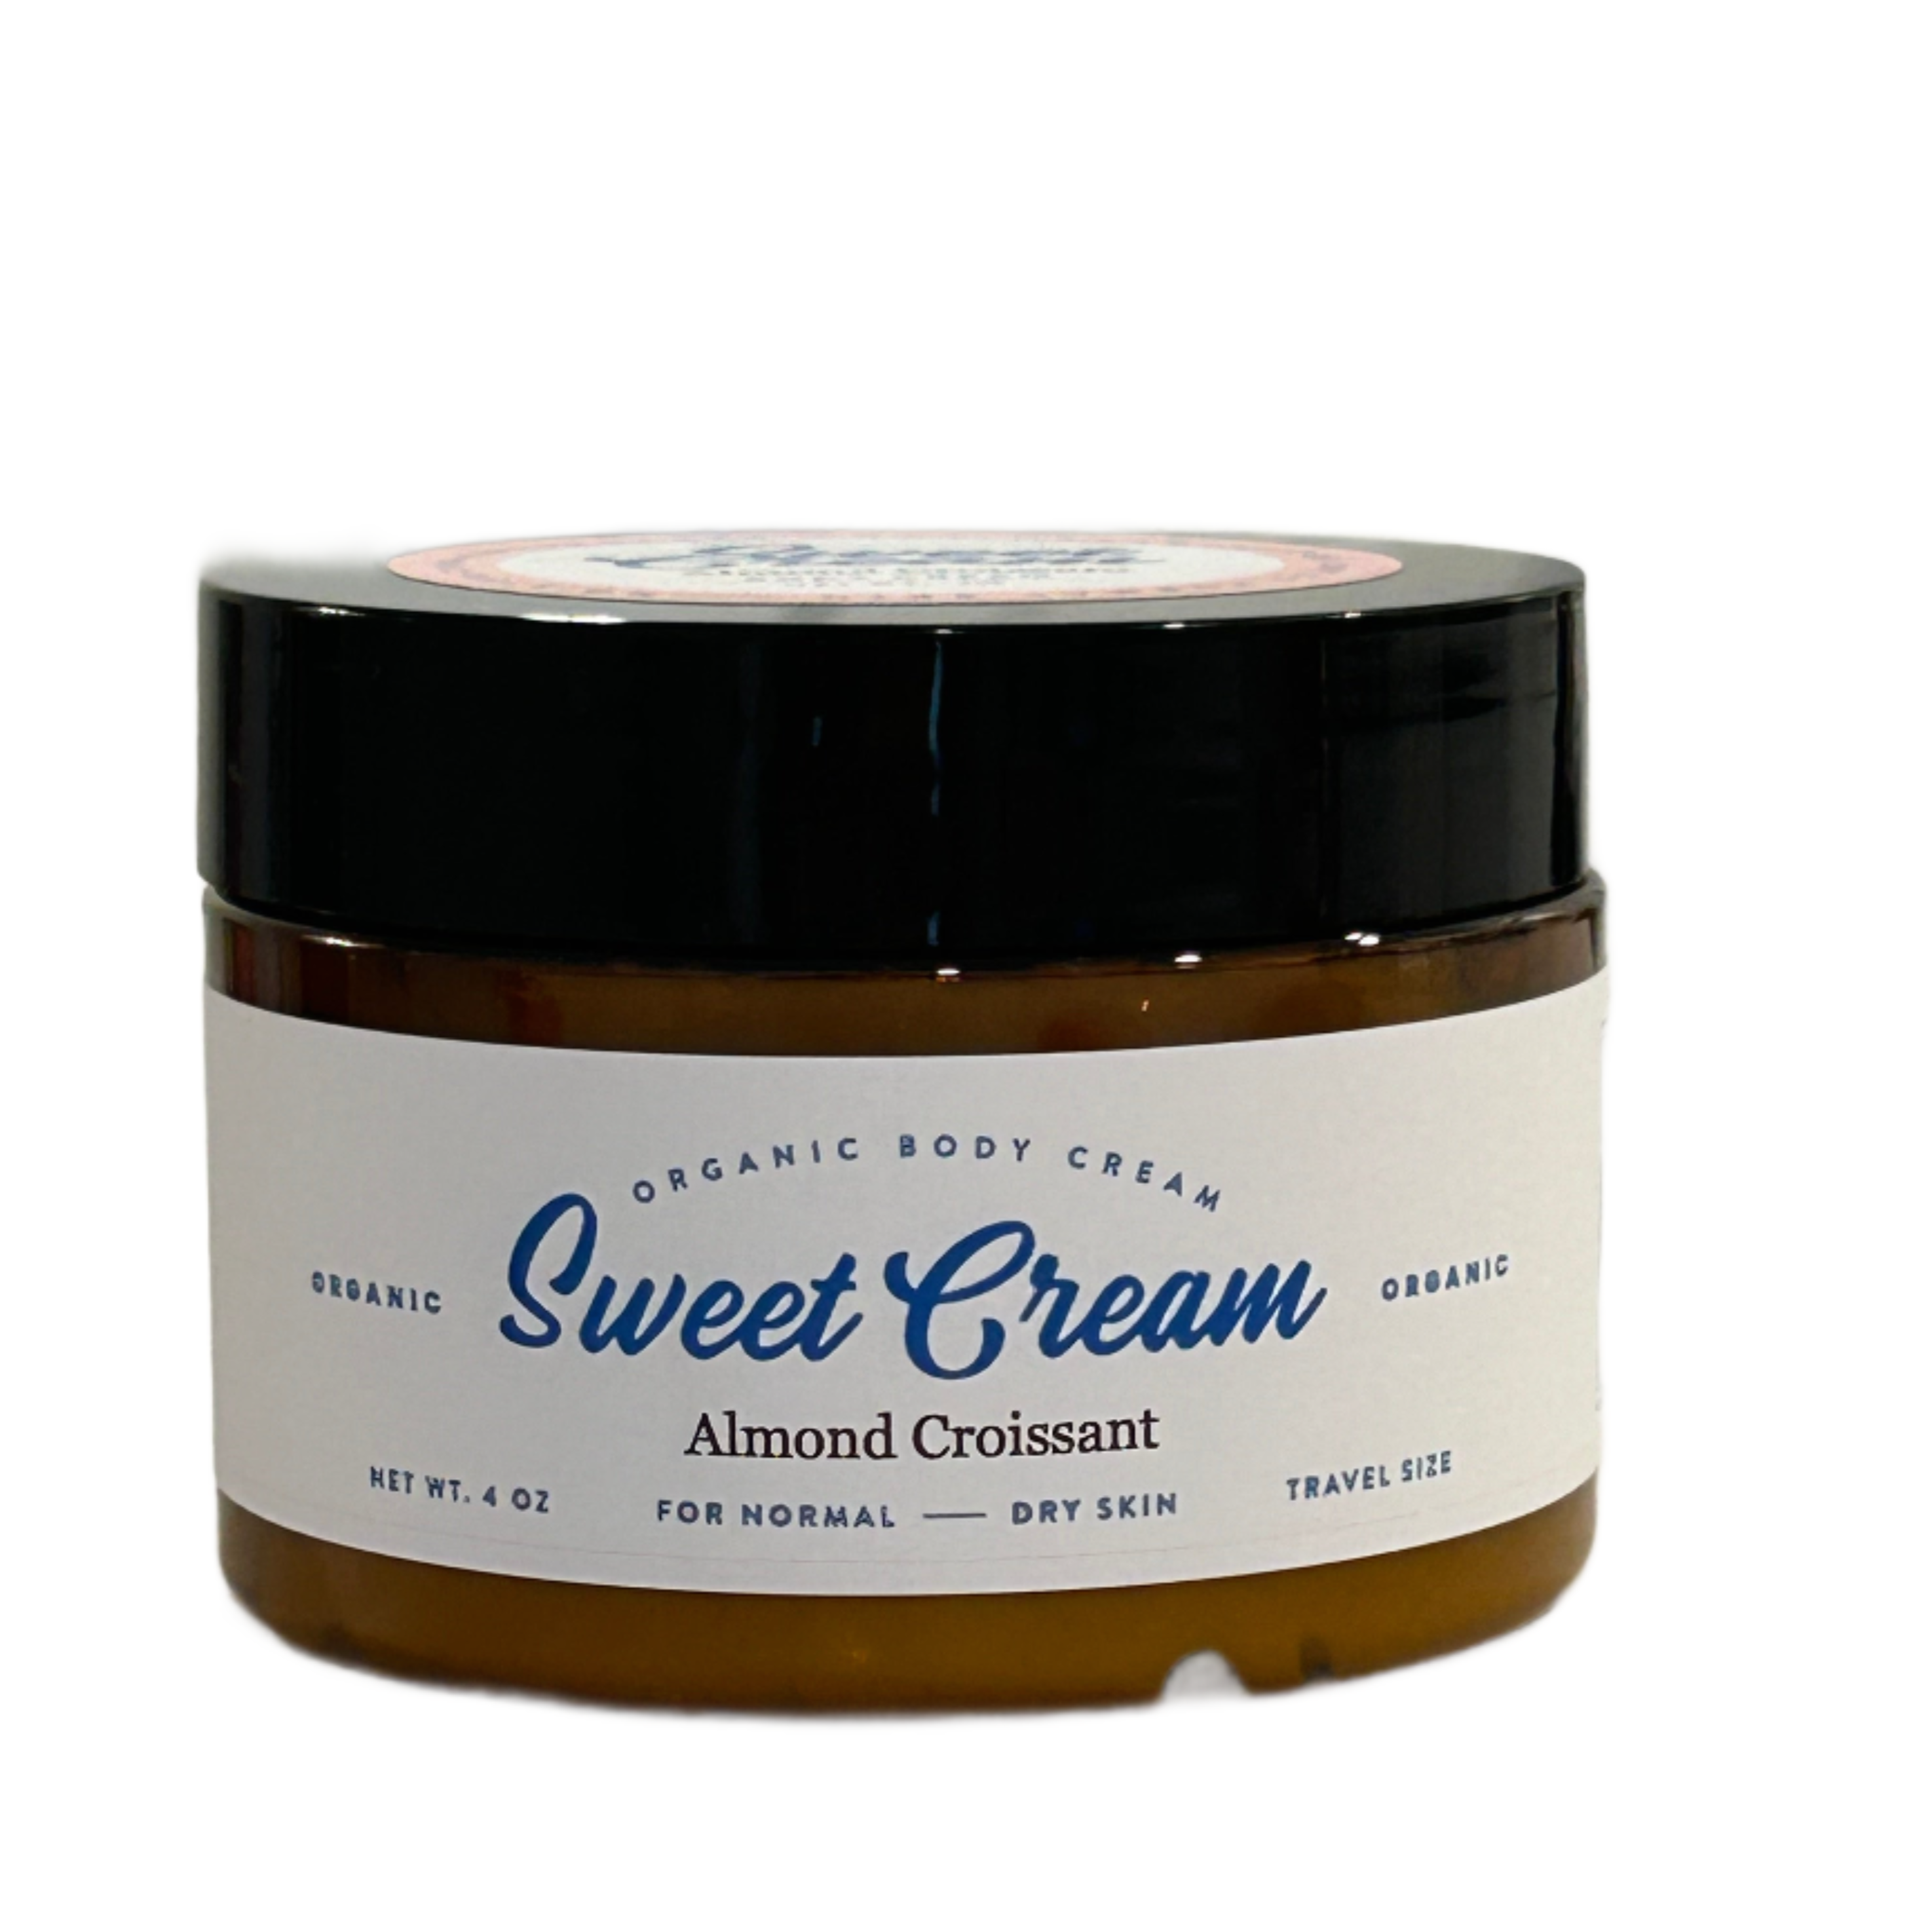 Almond Croissant Body Cream